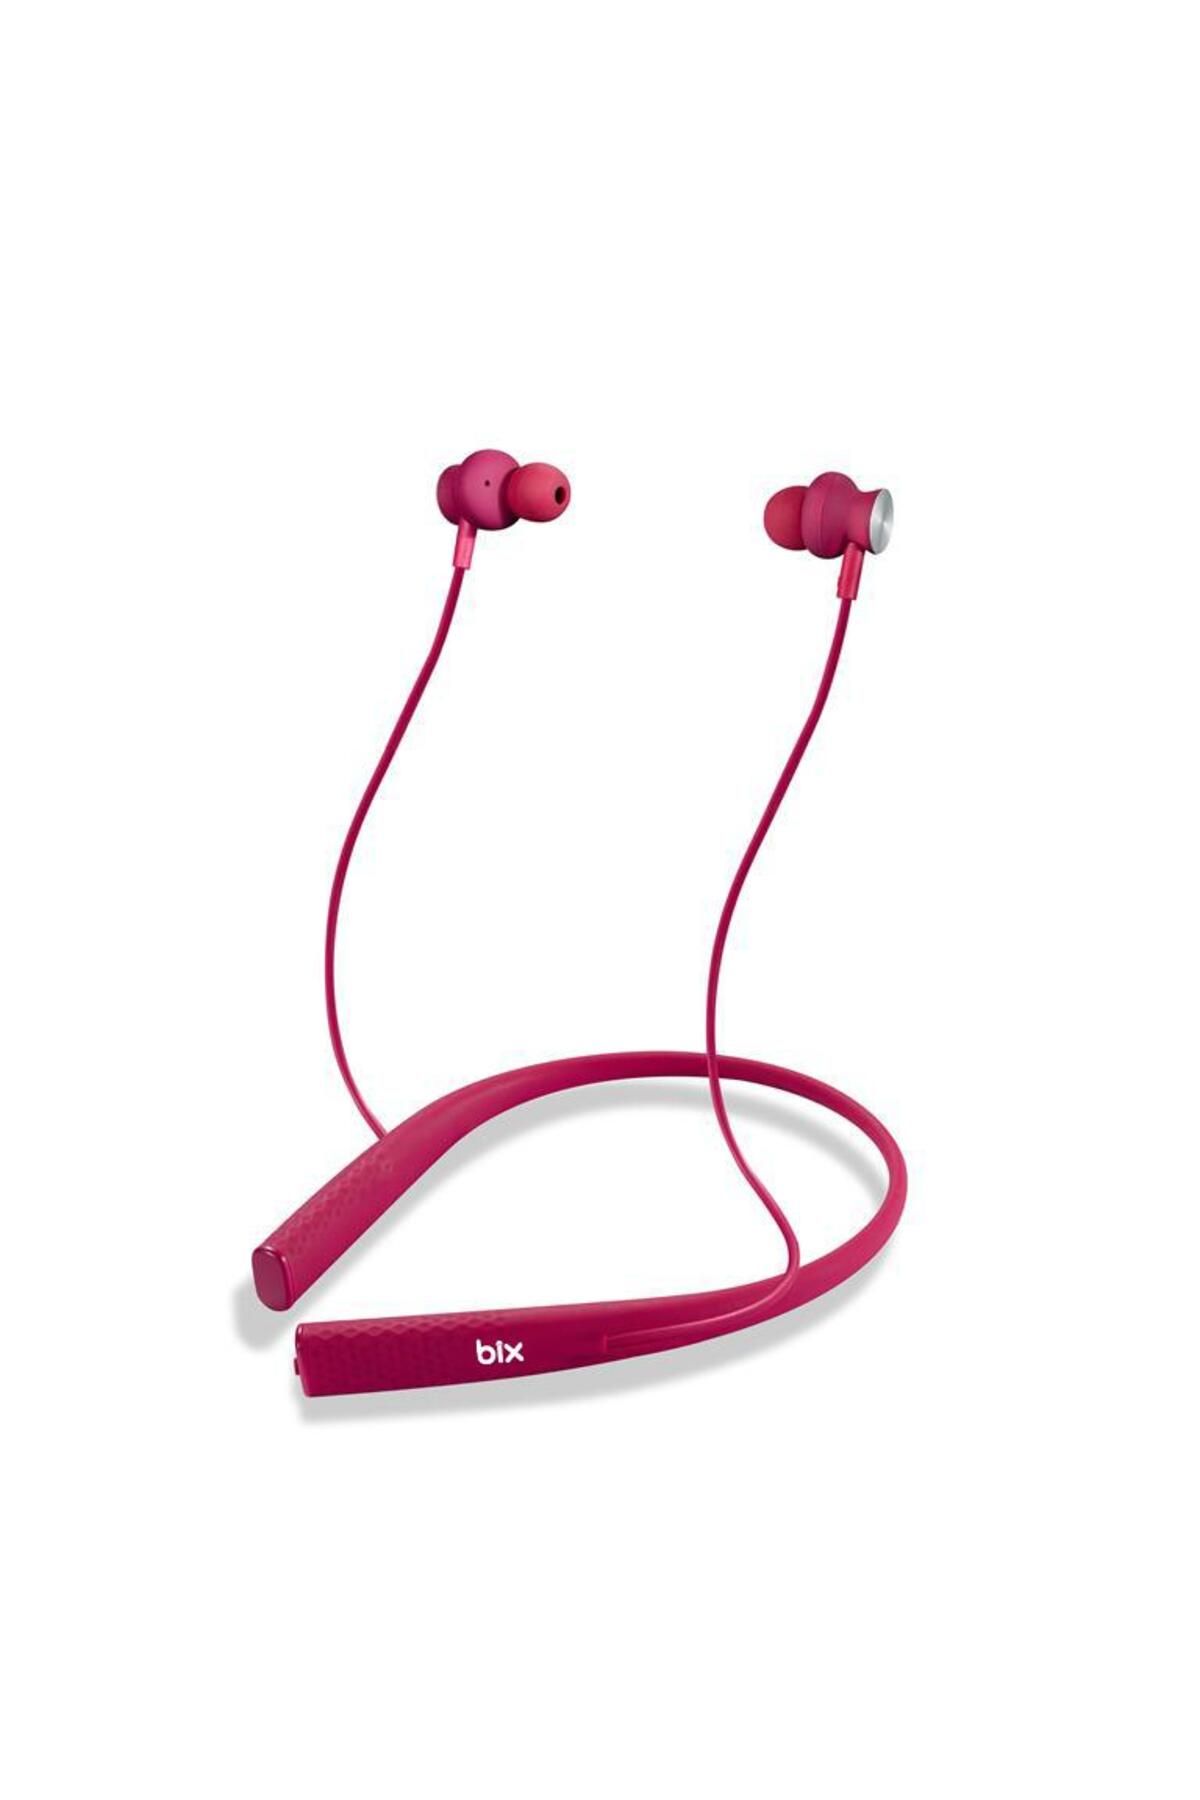 Bix A3 Spor Bluetooth Mıknatıslı Kulaklık Gül Kurusu